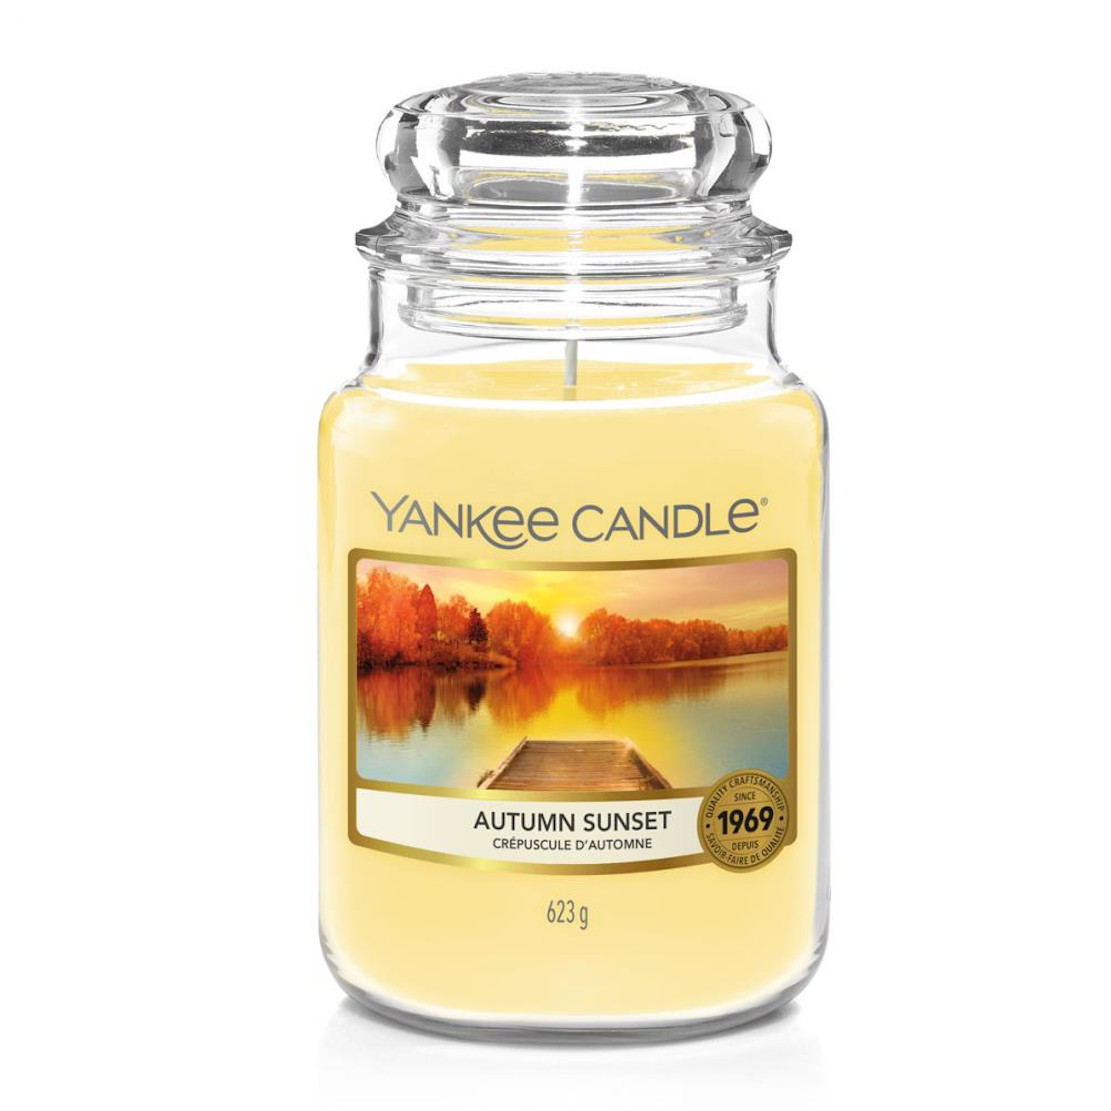 Yankee Candle Autumn Sunset Large Jar